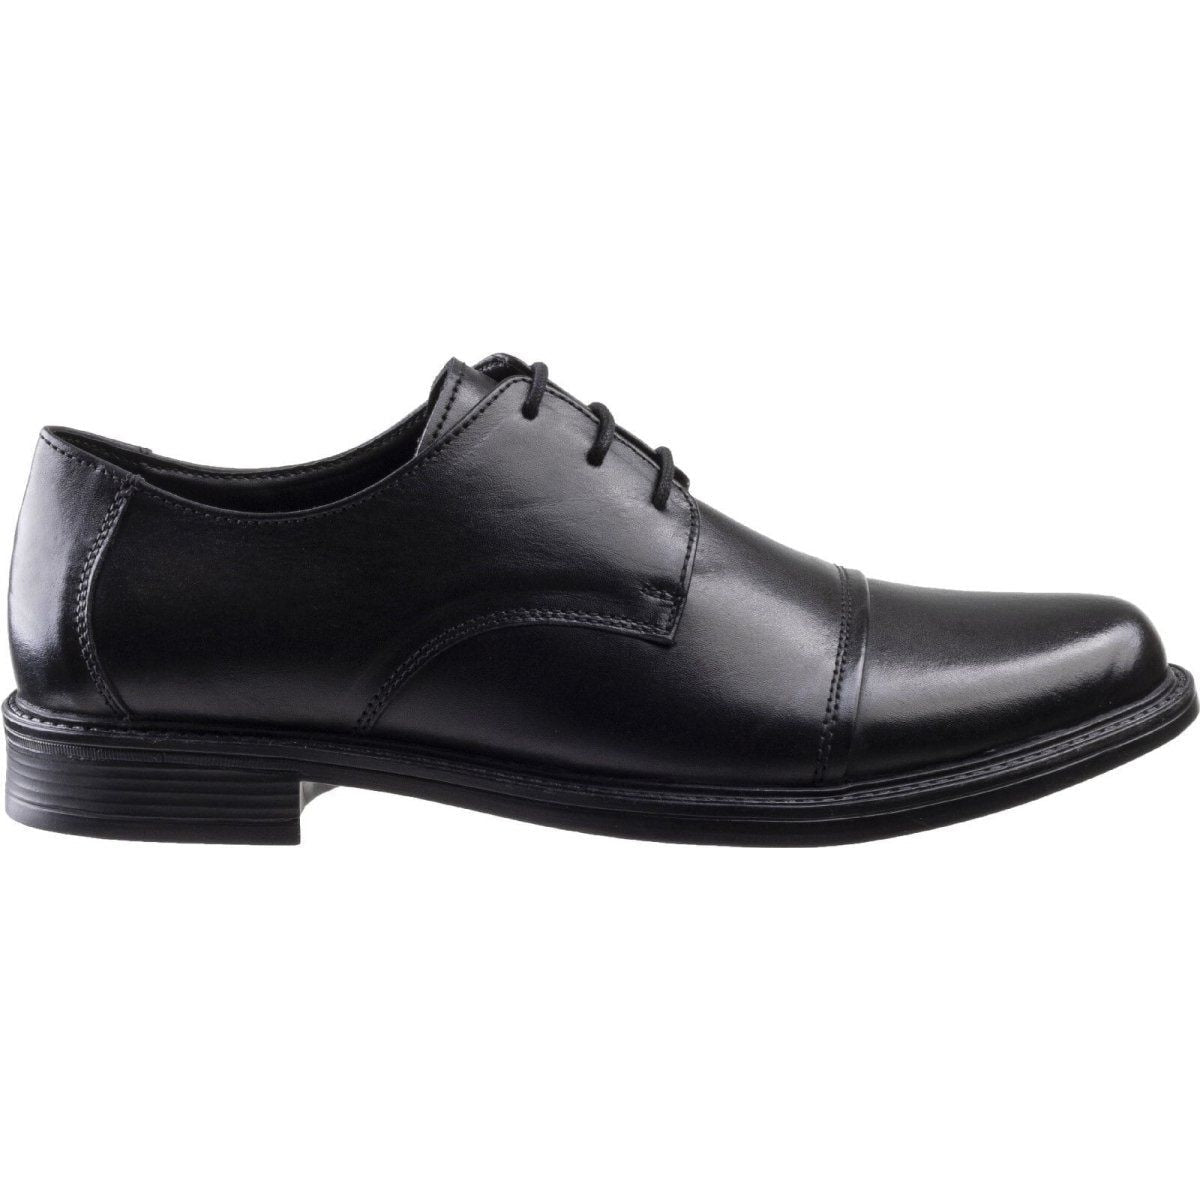 Amblers Bristol Leather Shoes Mens - workweargurus.com